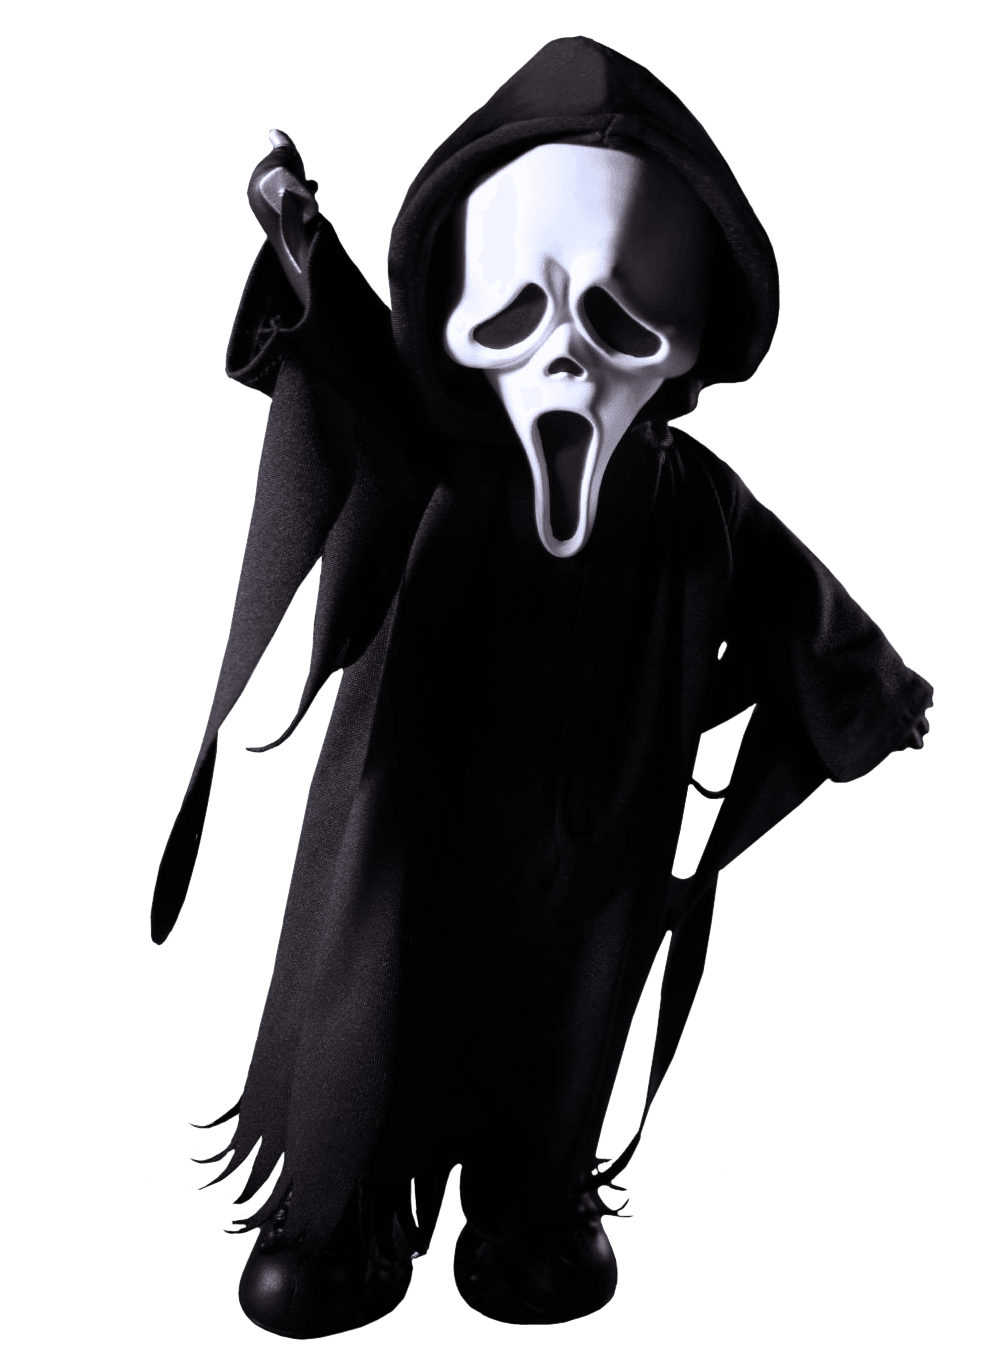 MEZ99614 Living Dead Dolls - Scream Ghost Face - Mezco Toyz - Titan Pop Culture